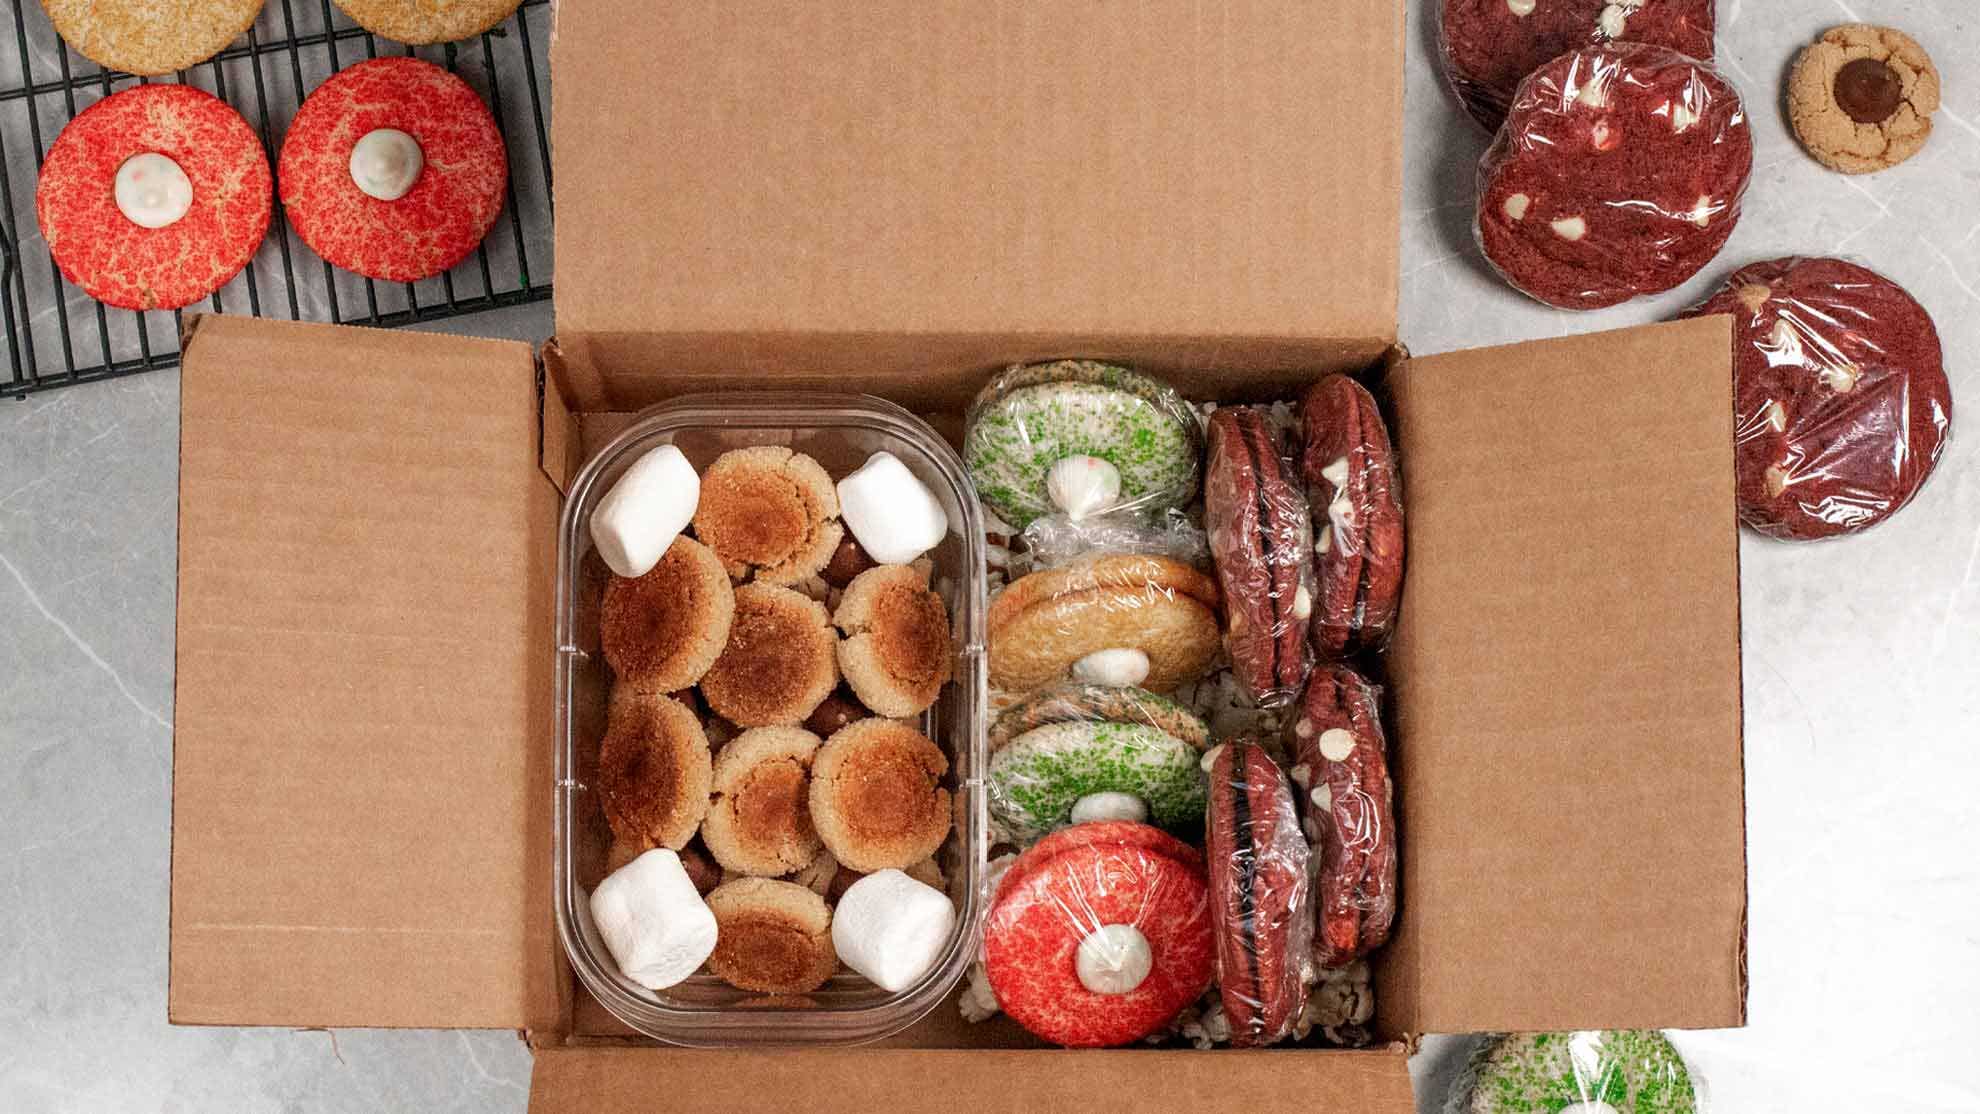 https://www.hersheyland.com/content/dam/hersheyland/en-us/blogs/blog-images/how-to-pack-and-ship-cookies-packaged-cookies-box-wide-hero.jpg